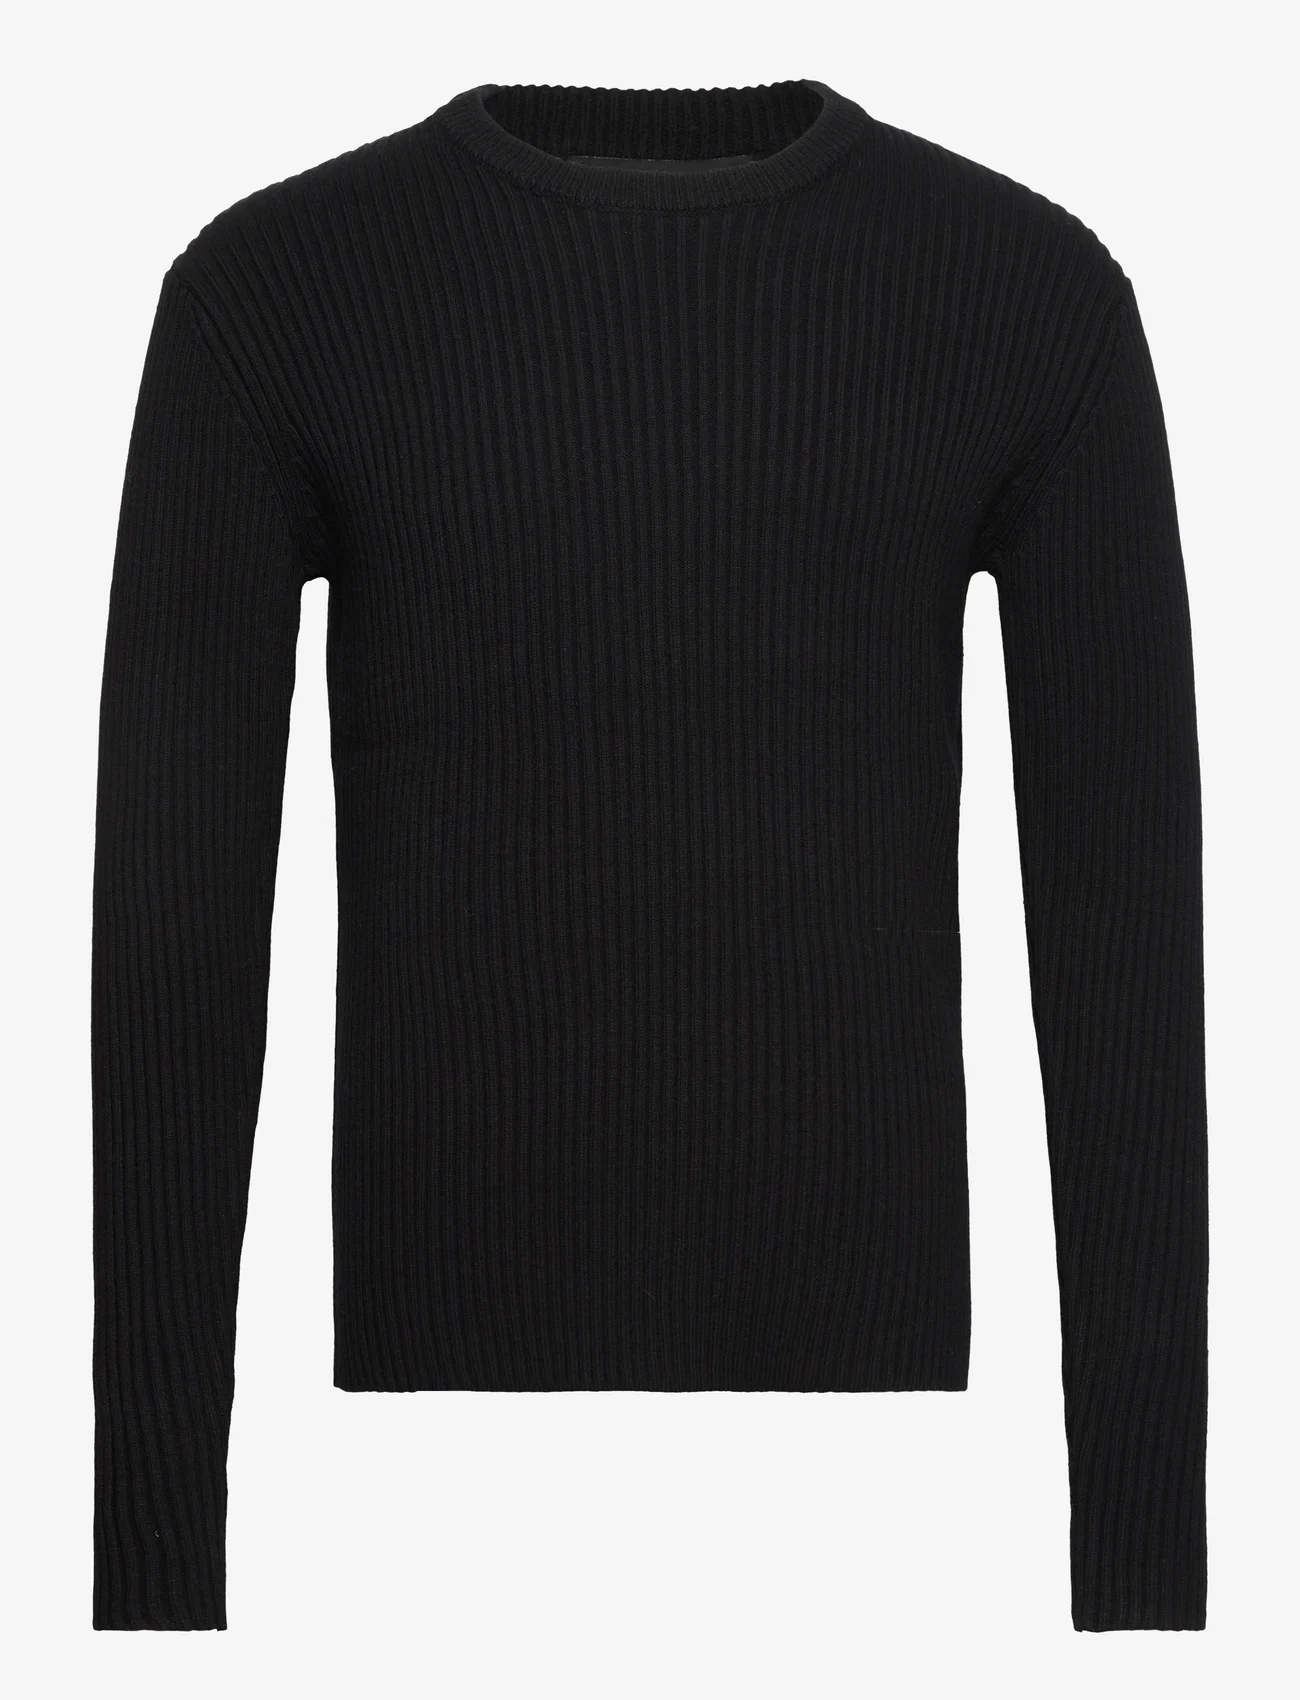 Bruuns Bazaar - SimBBBenny crew neck knit - Ümmarguse kaelusega kudumid - black - 0